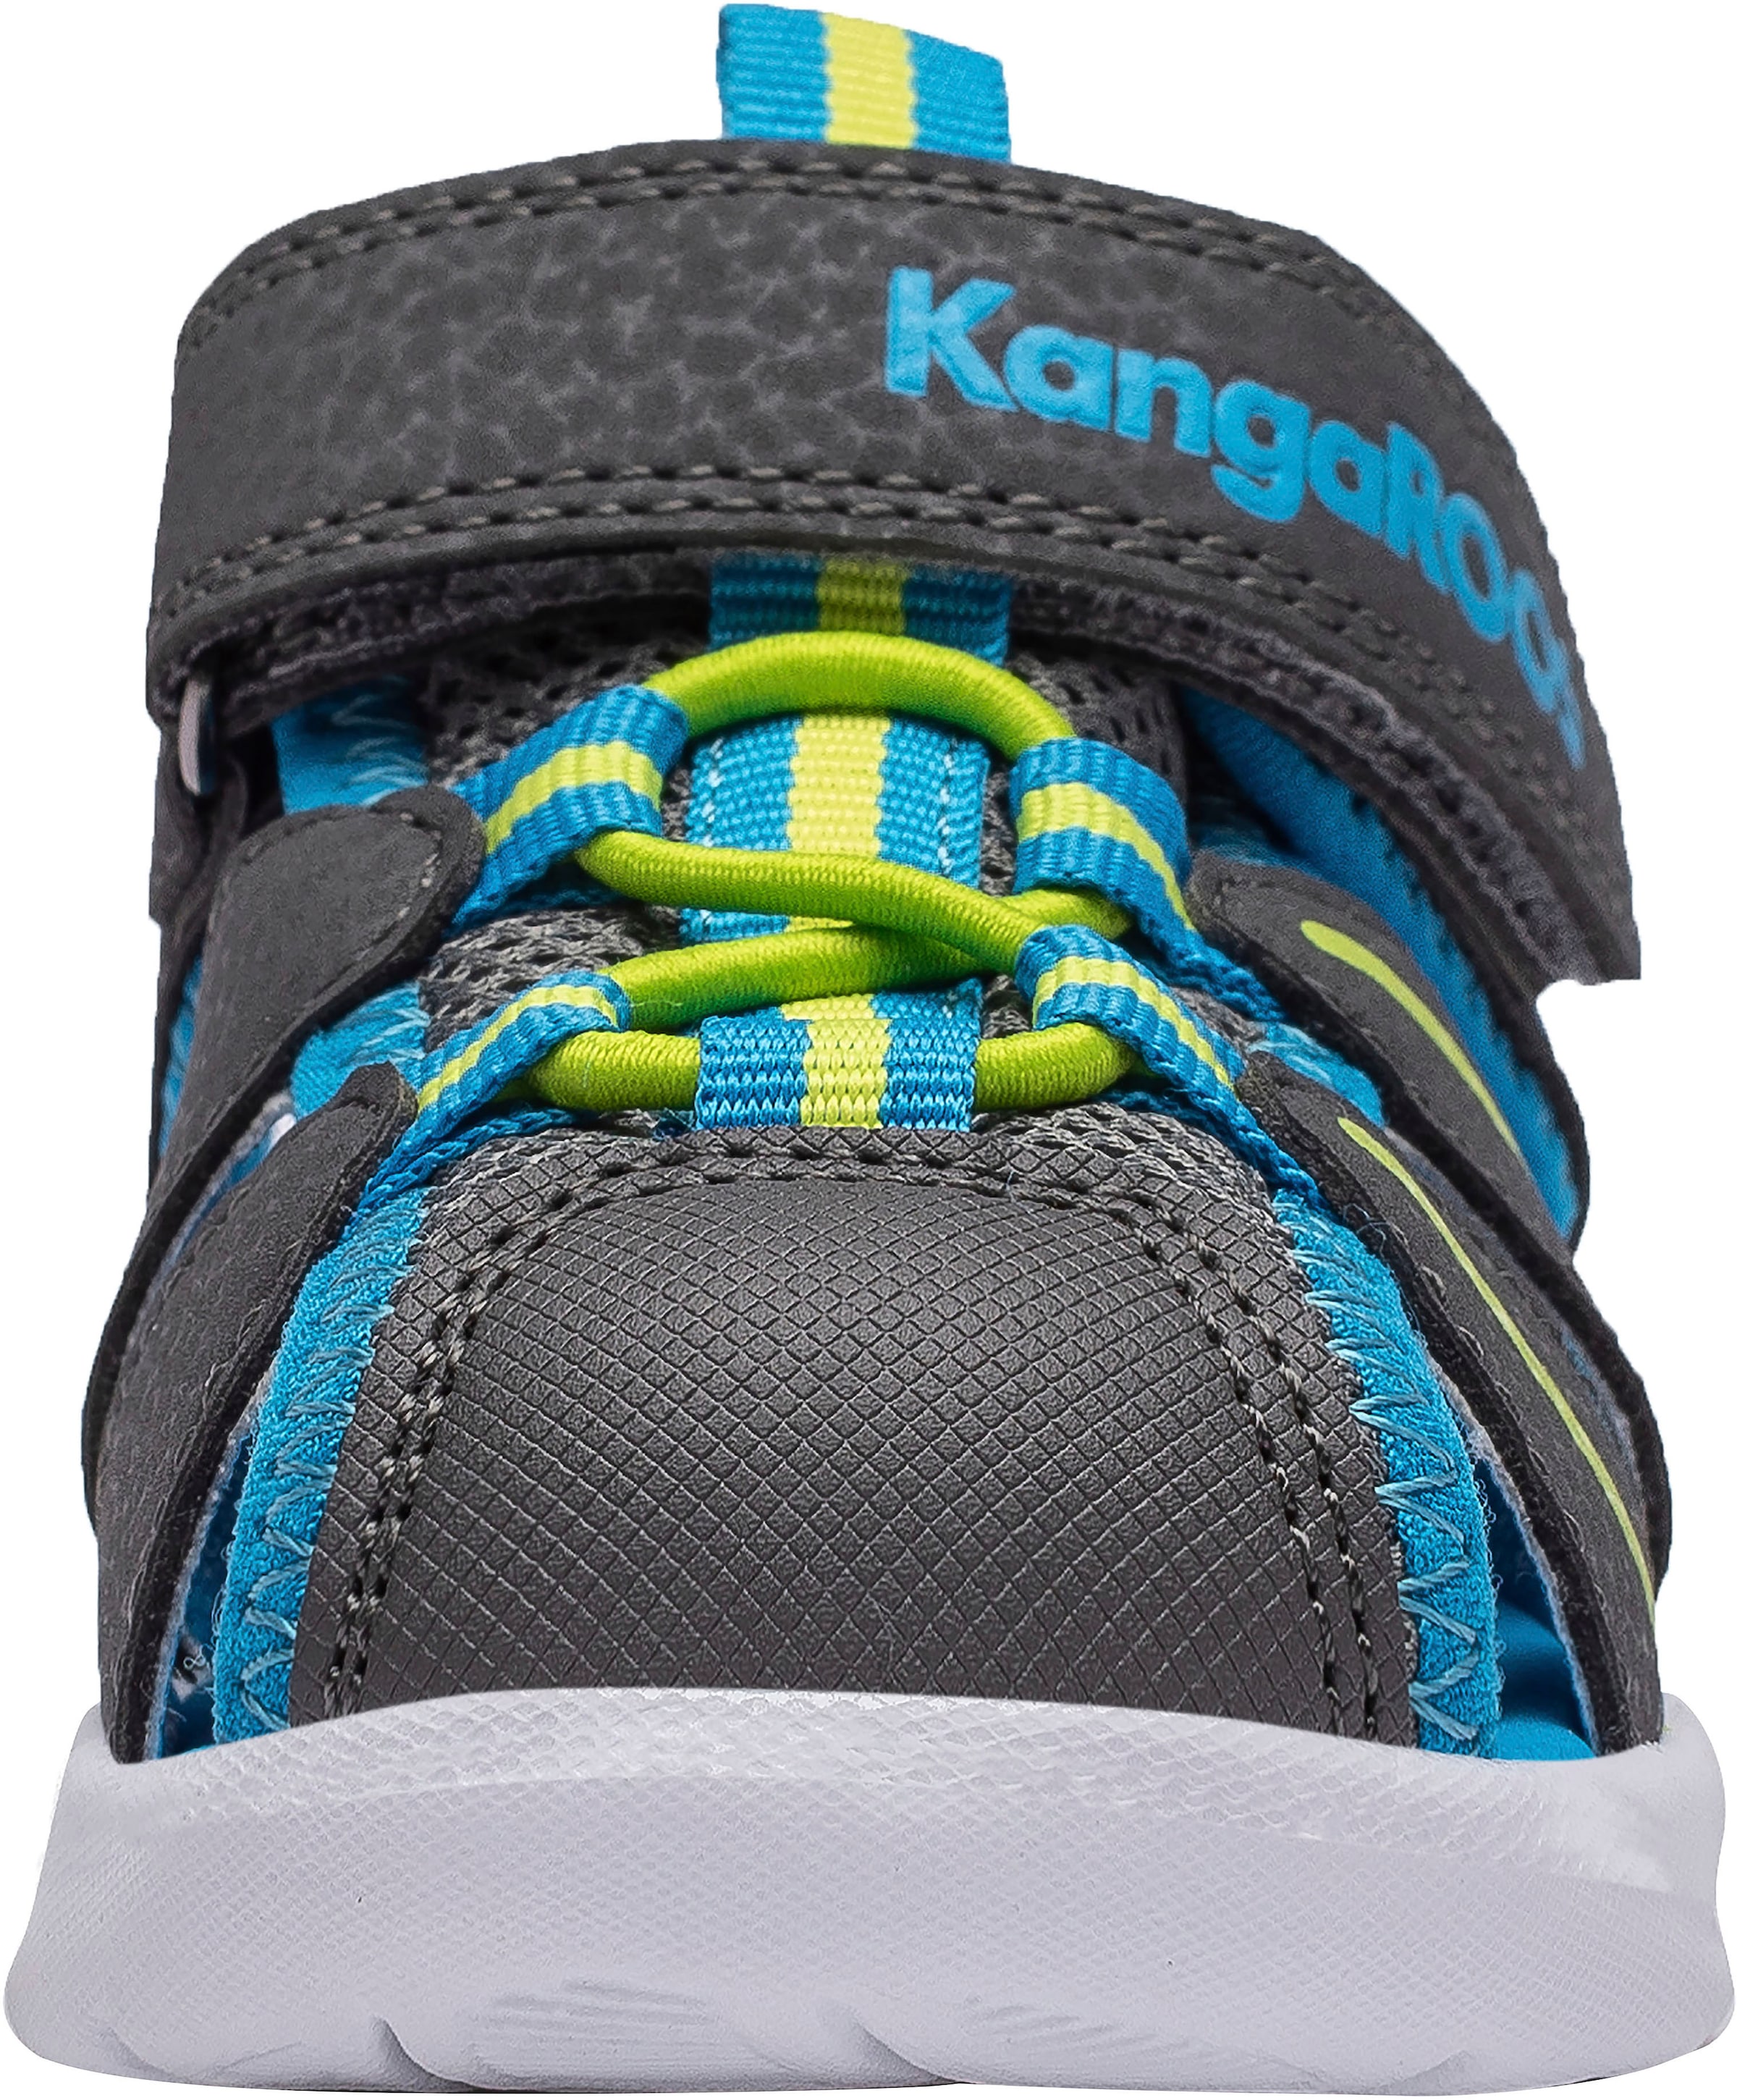 KangaROOS Sandale »K-Grobi«, mit Klettverschluss